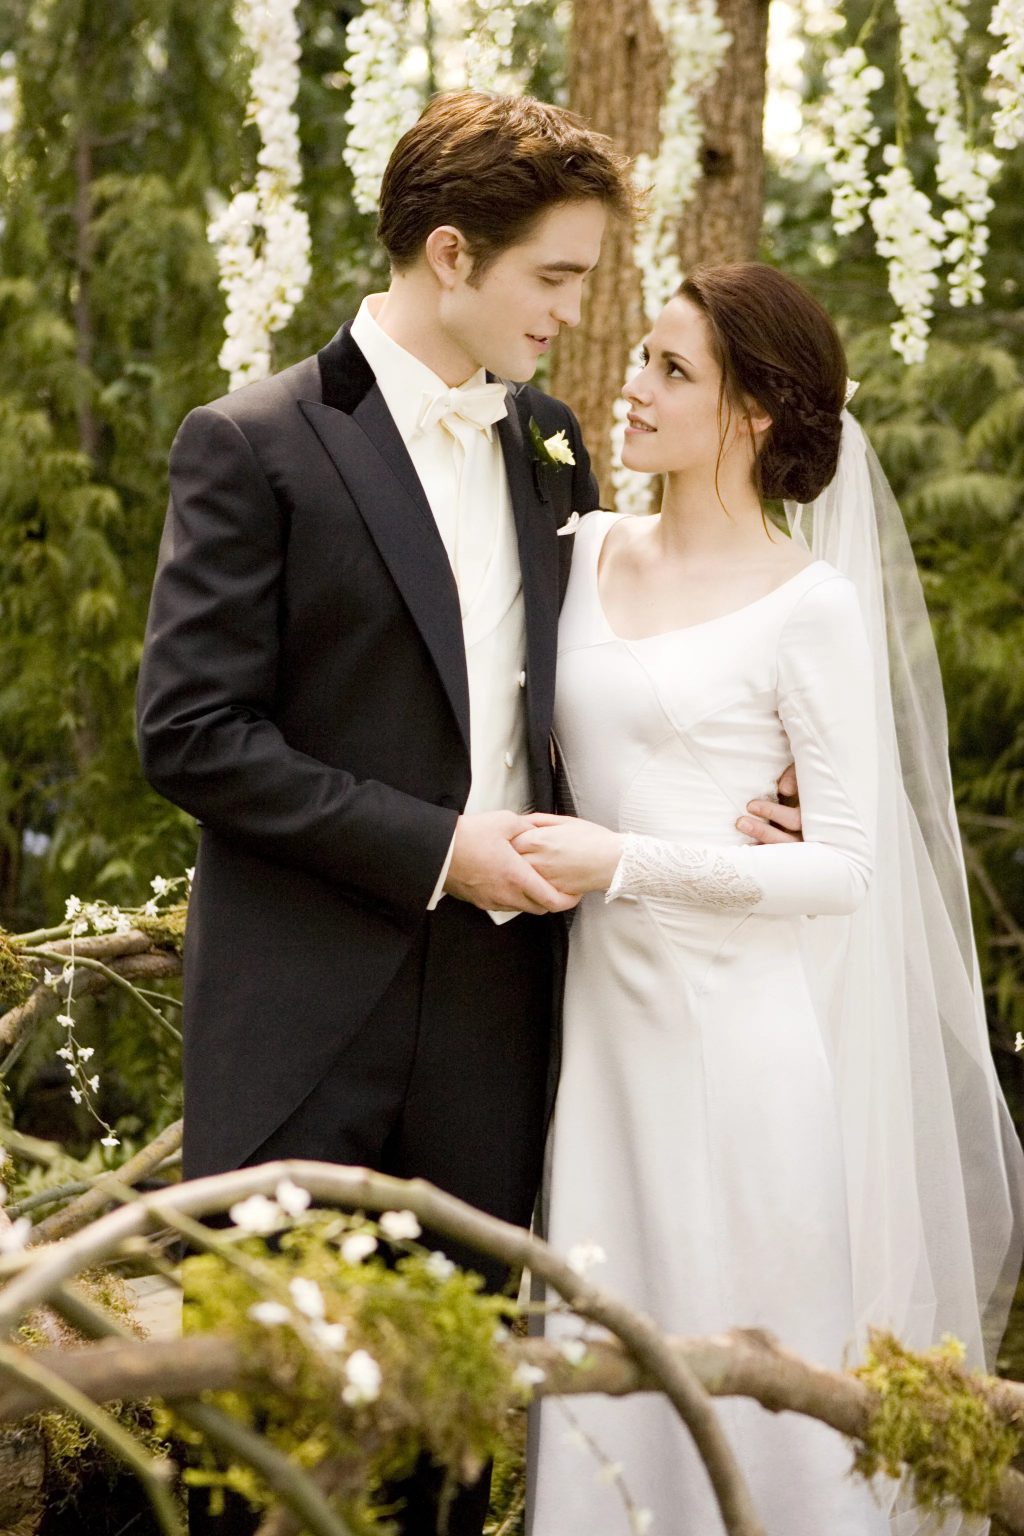 hôn lễ của Bella Swan trong Twilight